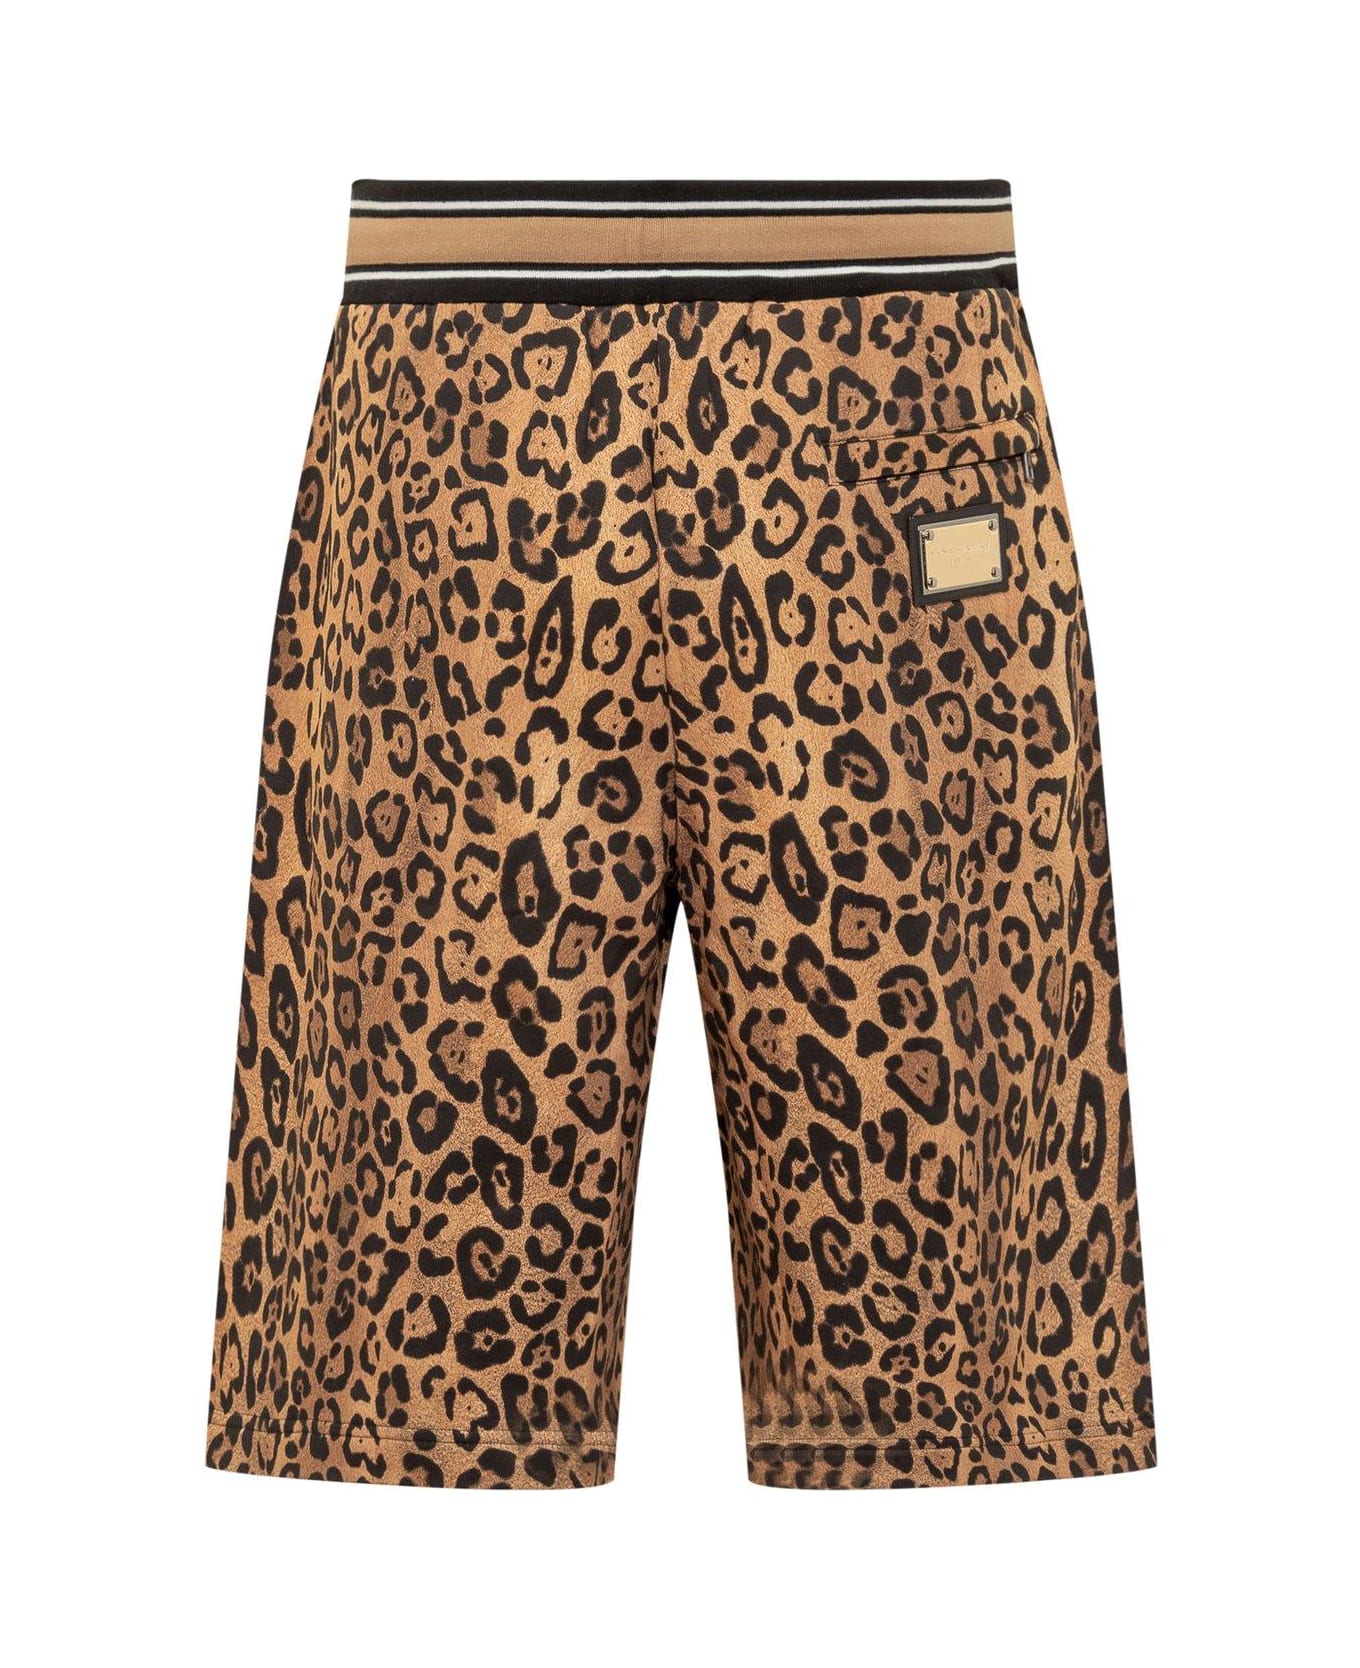 Dolce & Gabbana Cheetah-printed Drawstring Track Shorts - BROWN/BLACK